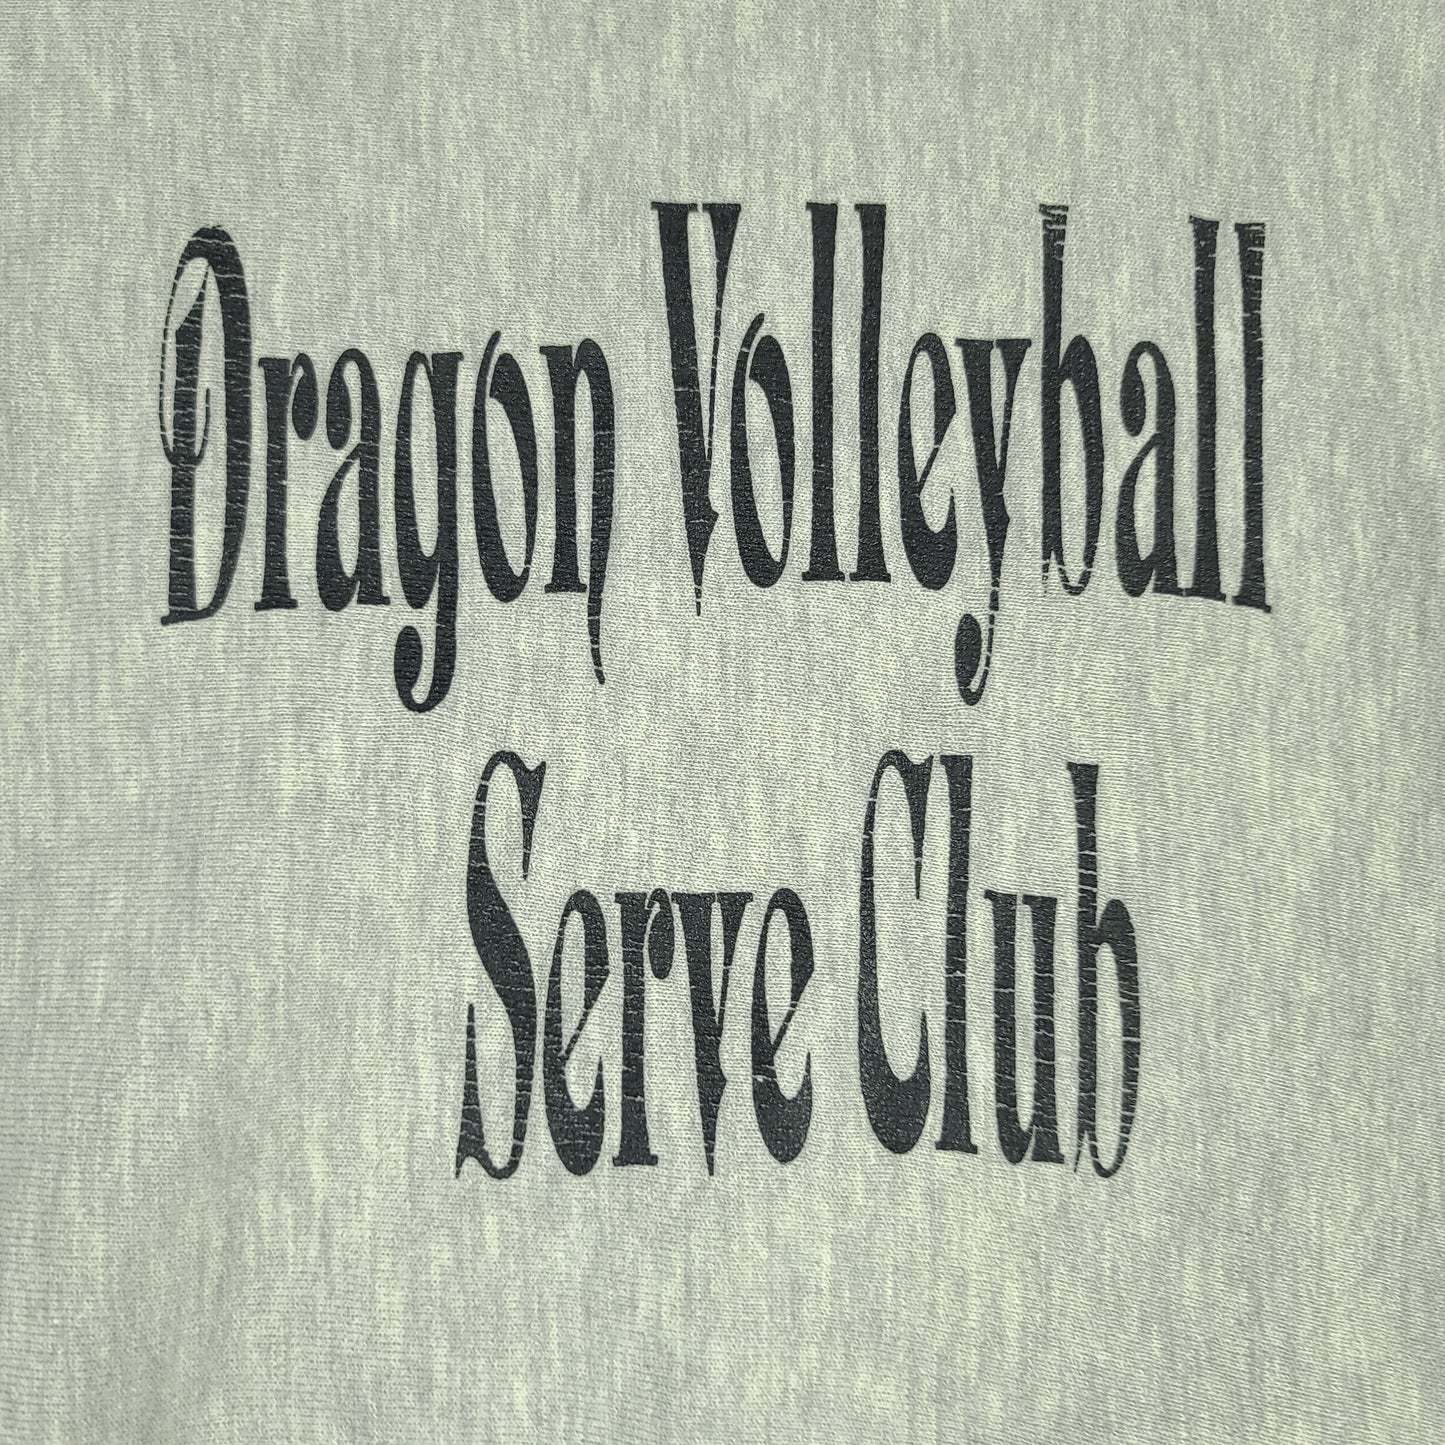 Vintage 90's Dragon Volleyball Serve Club Gray Sweatshirt